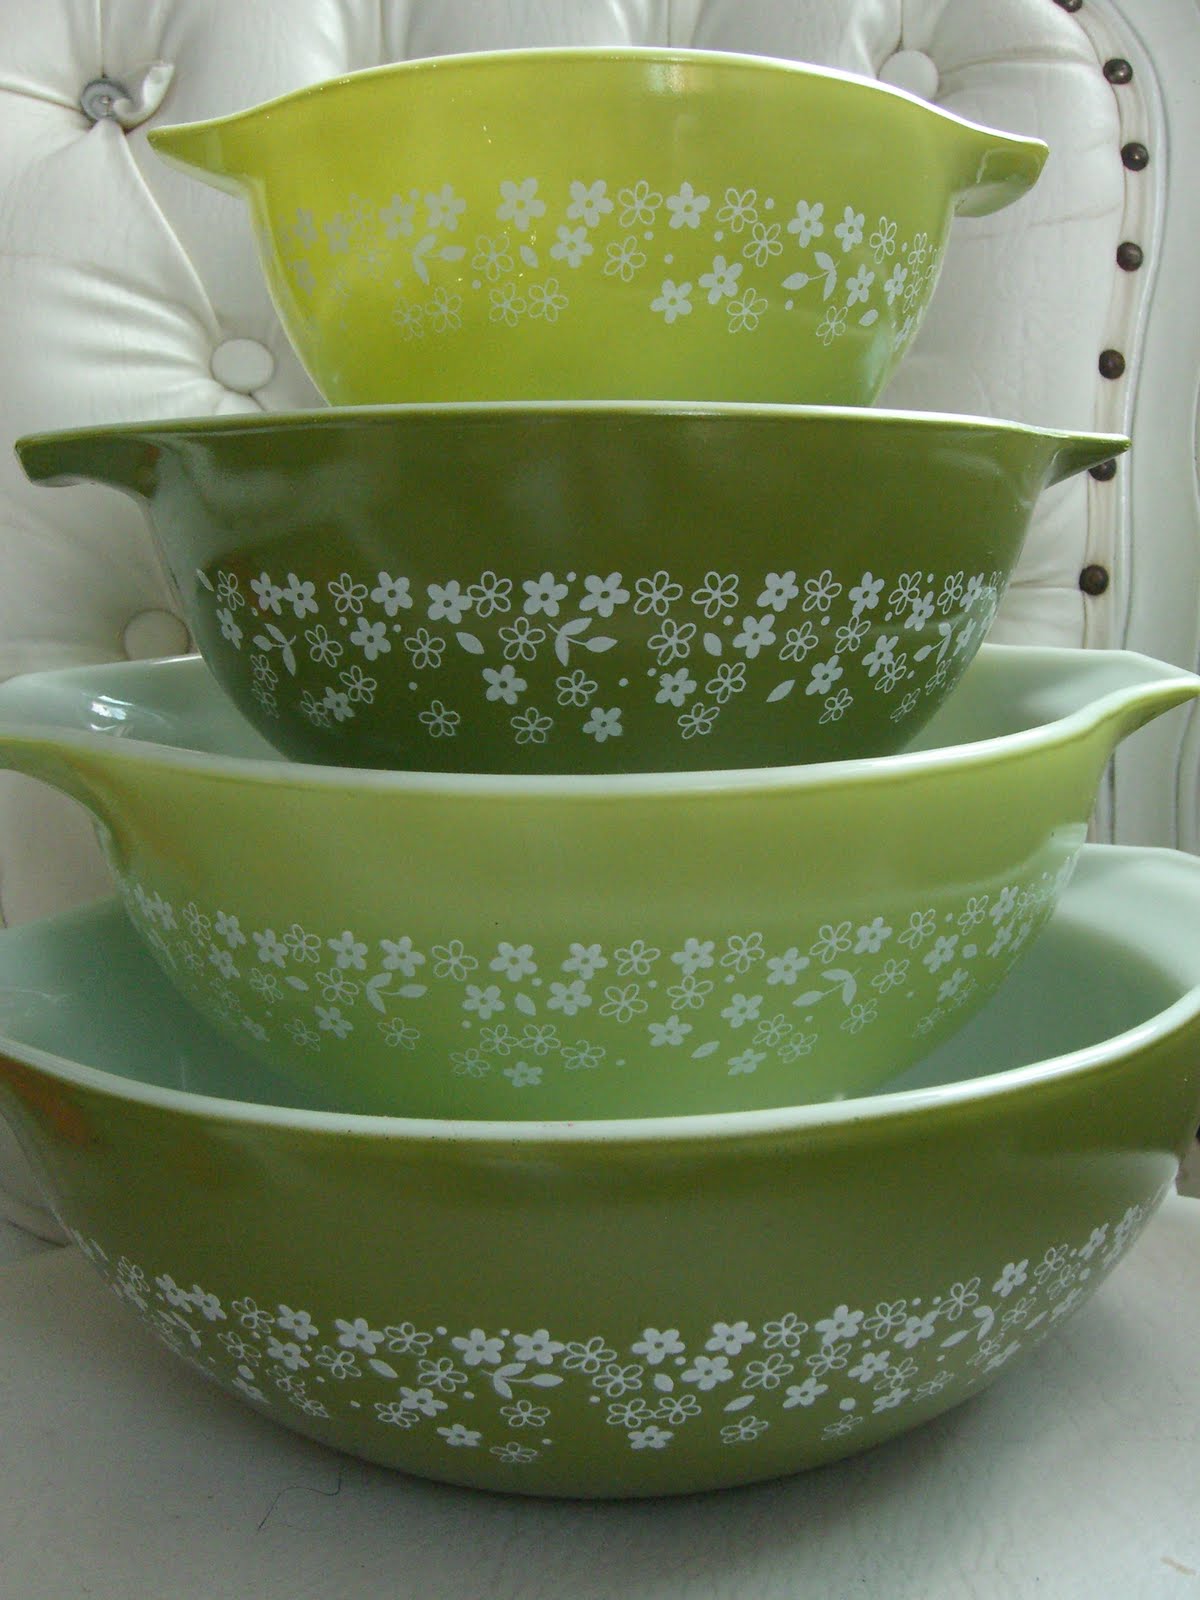 Buy Vintage Pyrex Mixing Bowls, Spring Blossom Mixing Bowl, Set of